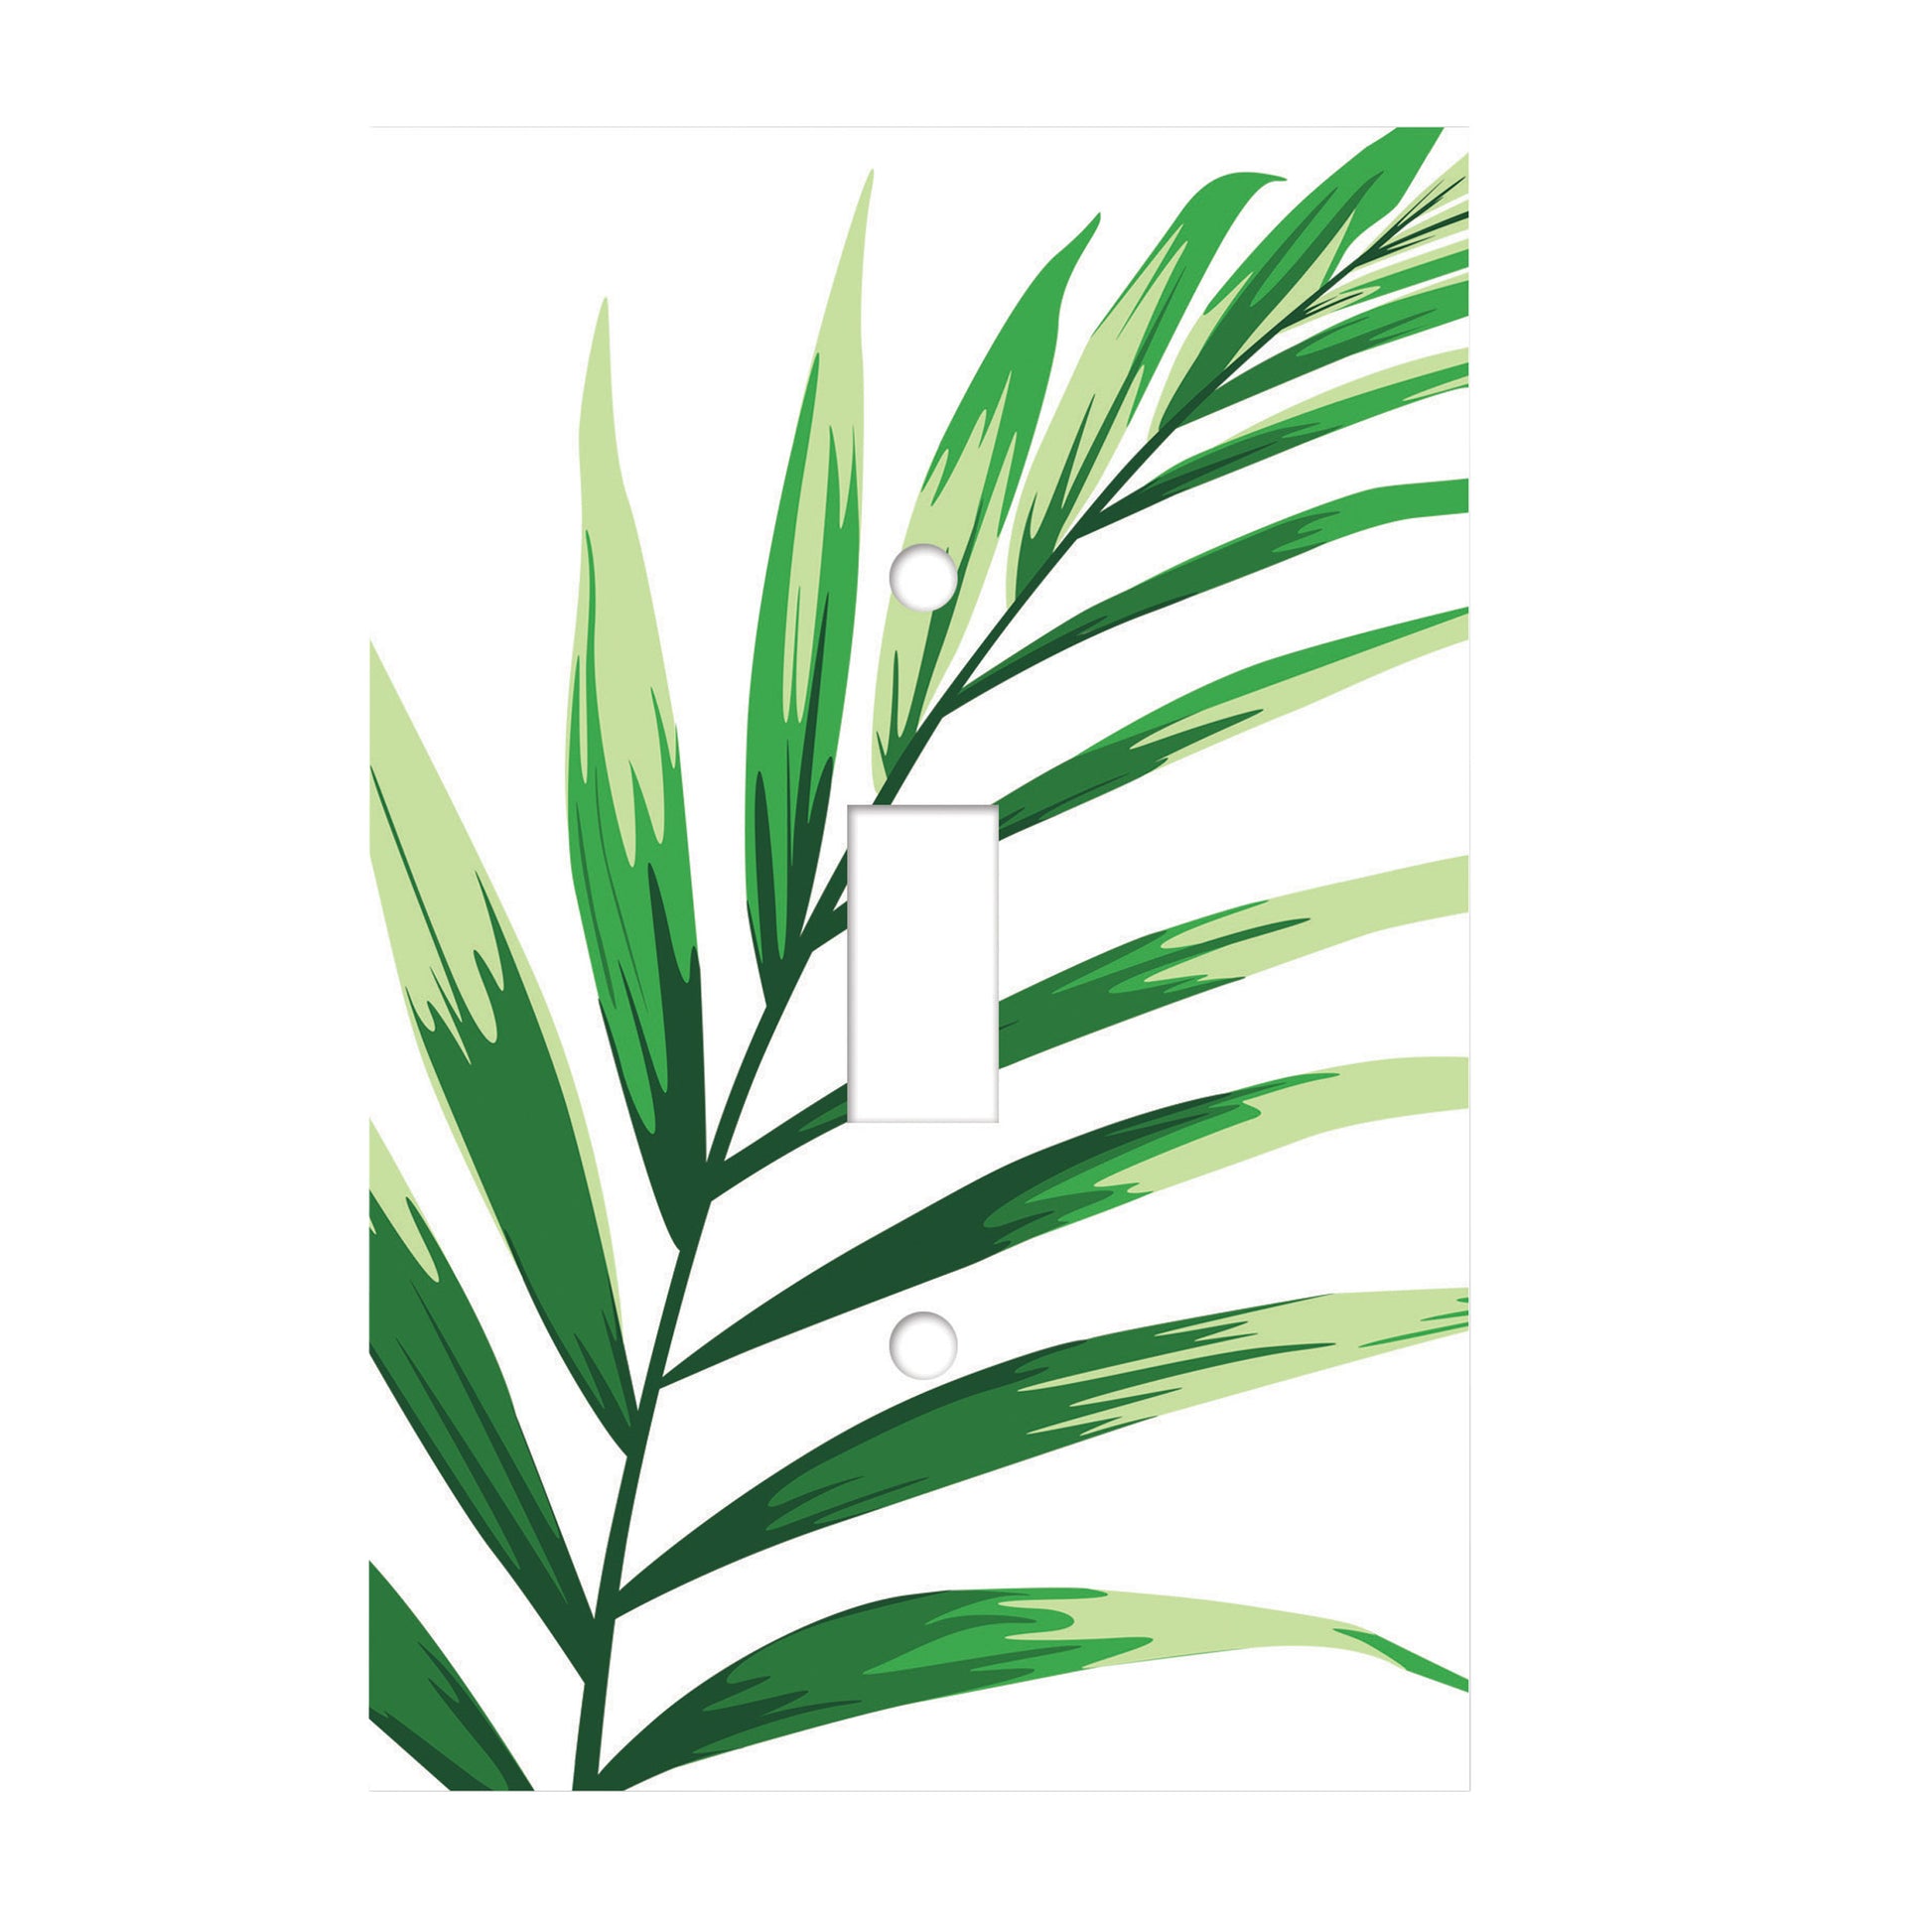 ceramic single toggle switchplate featuring illustration of green arcea palm leaf.